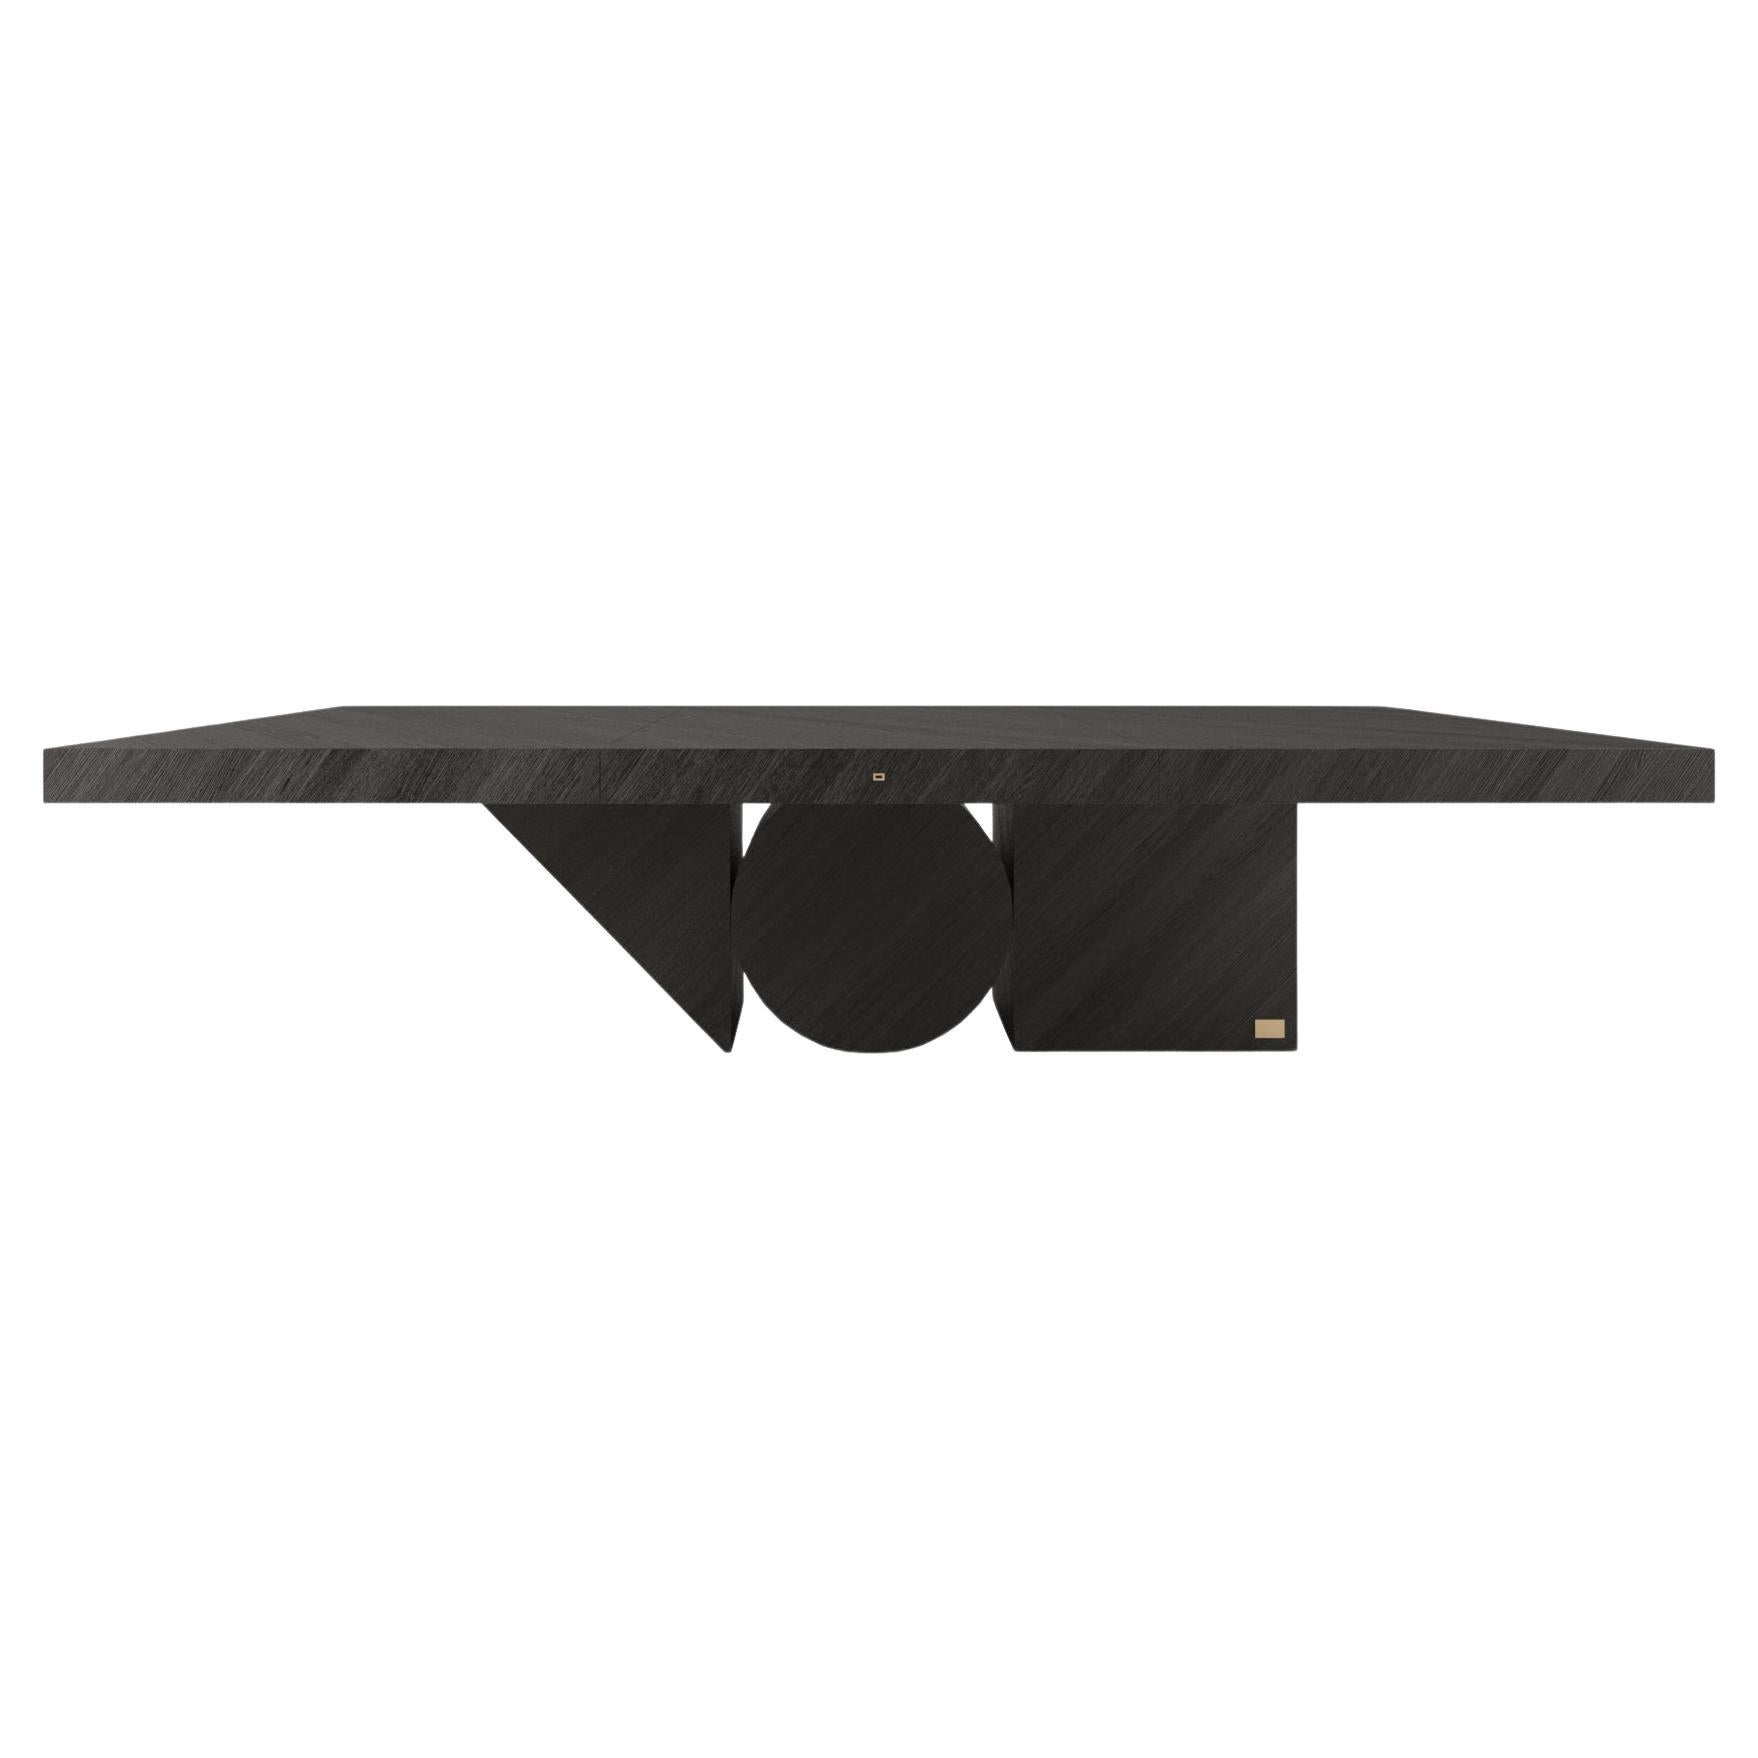 FELIX SCHWAKE Dining-Table Black Wood 300x140x76cm Triangle, Circle, Square Leg For Sale